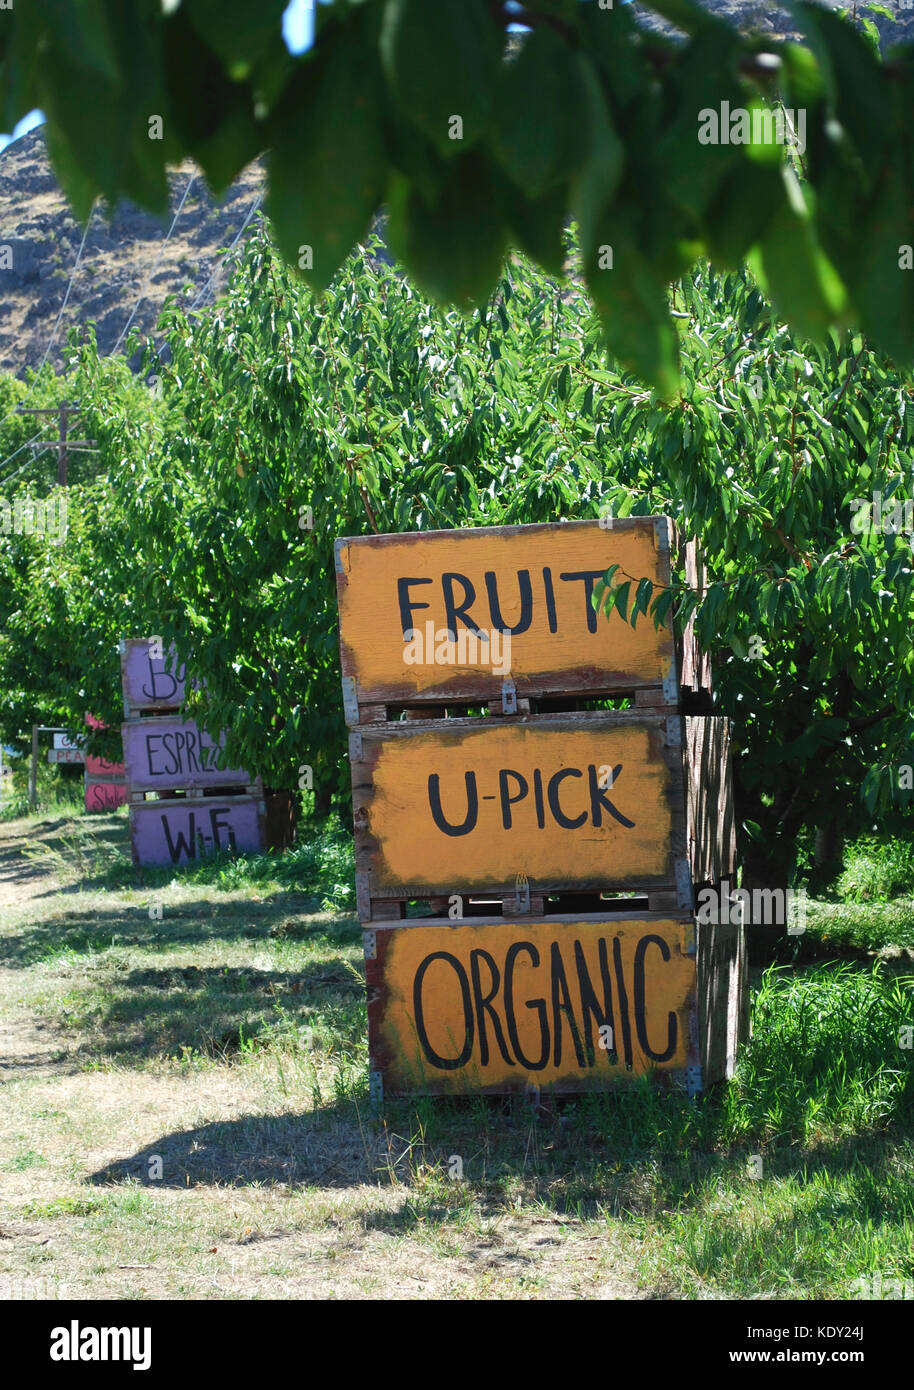 U Pick fruit Orchards signs - Eastern Washington State, USA Stock Photo